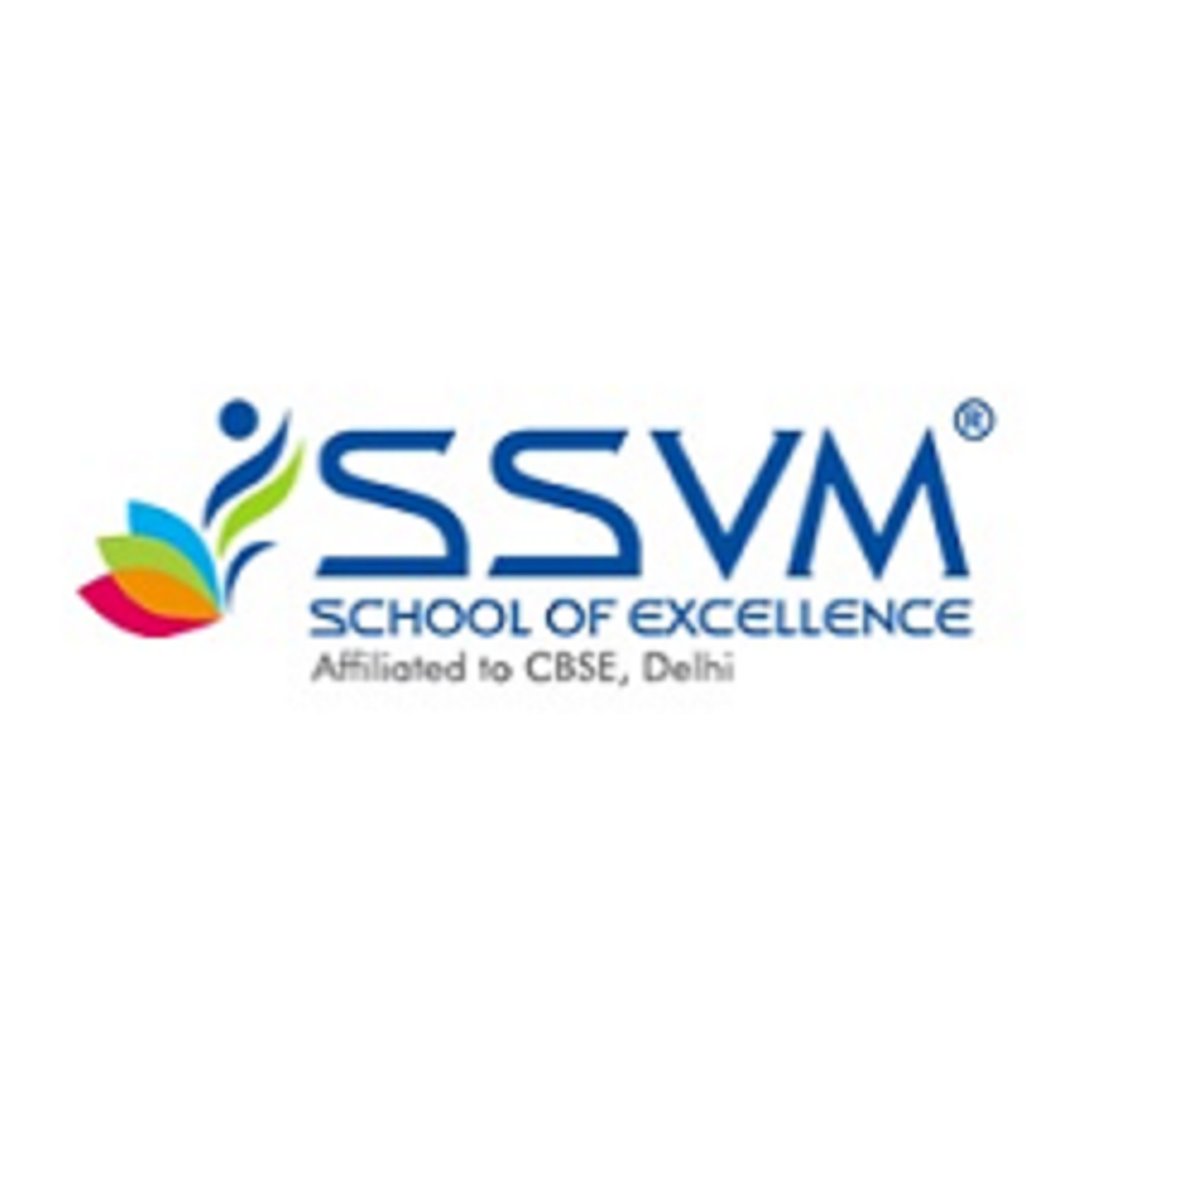 SSVM School of Excellence|Schools|Education